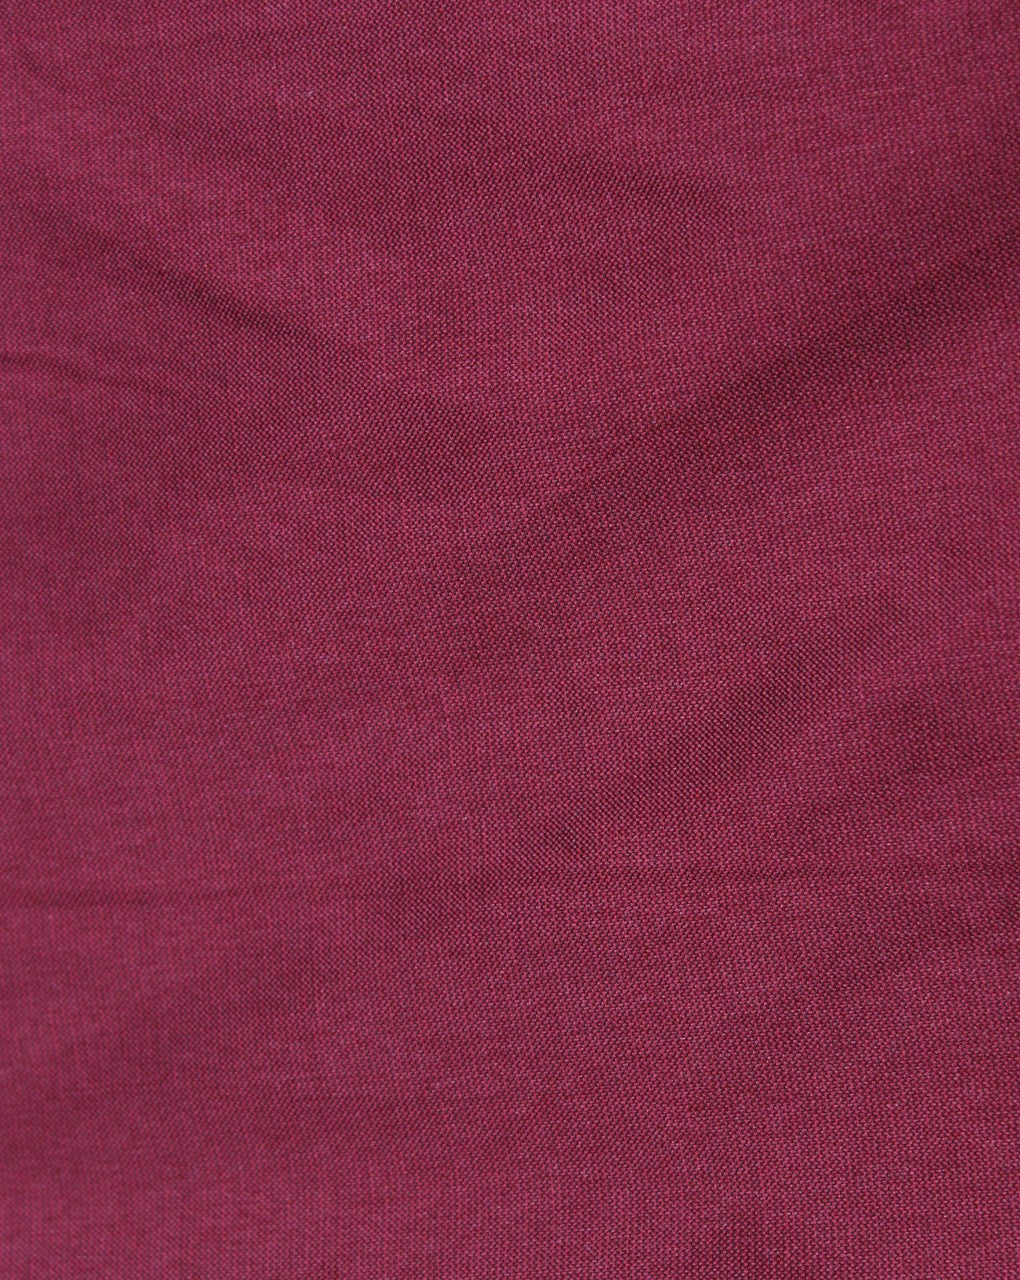 Plain Maroon Polyester Taffeta Fabric